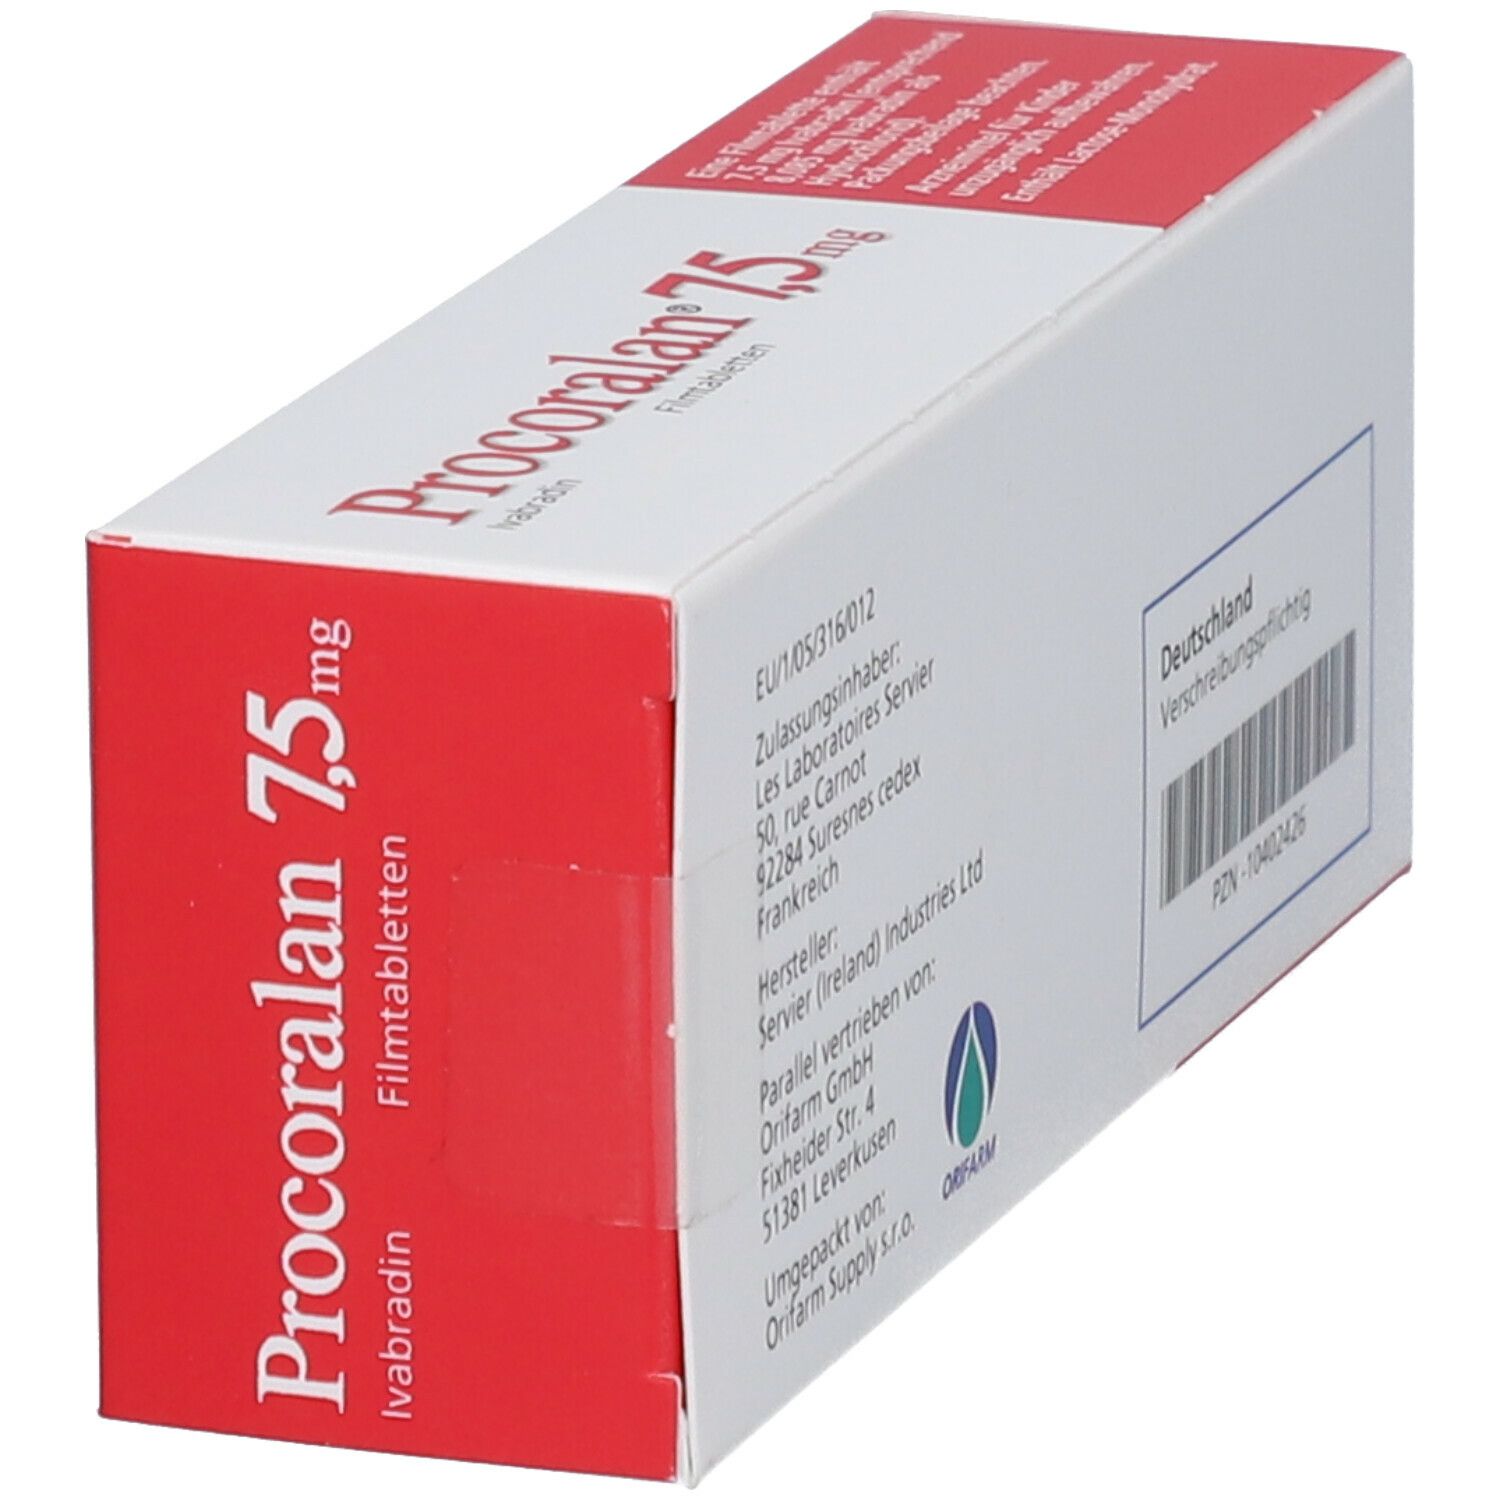 Procoralan 7,5 mg